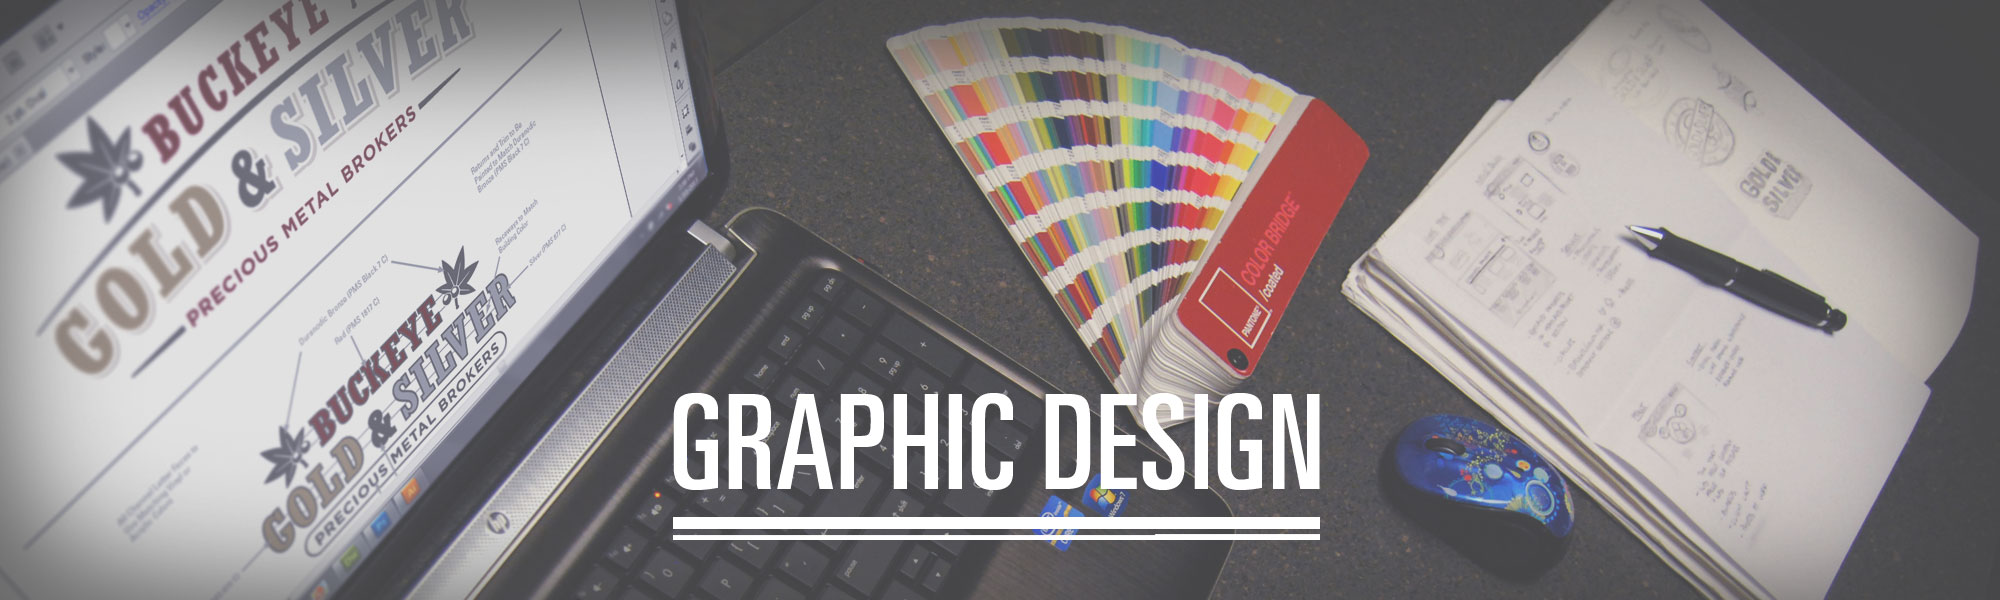 Graphic Design - Graphic Design, Web Design, and Branding